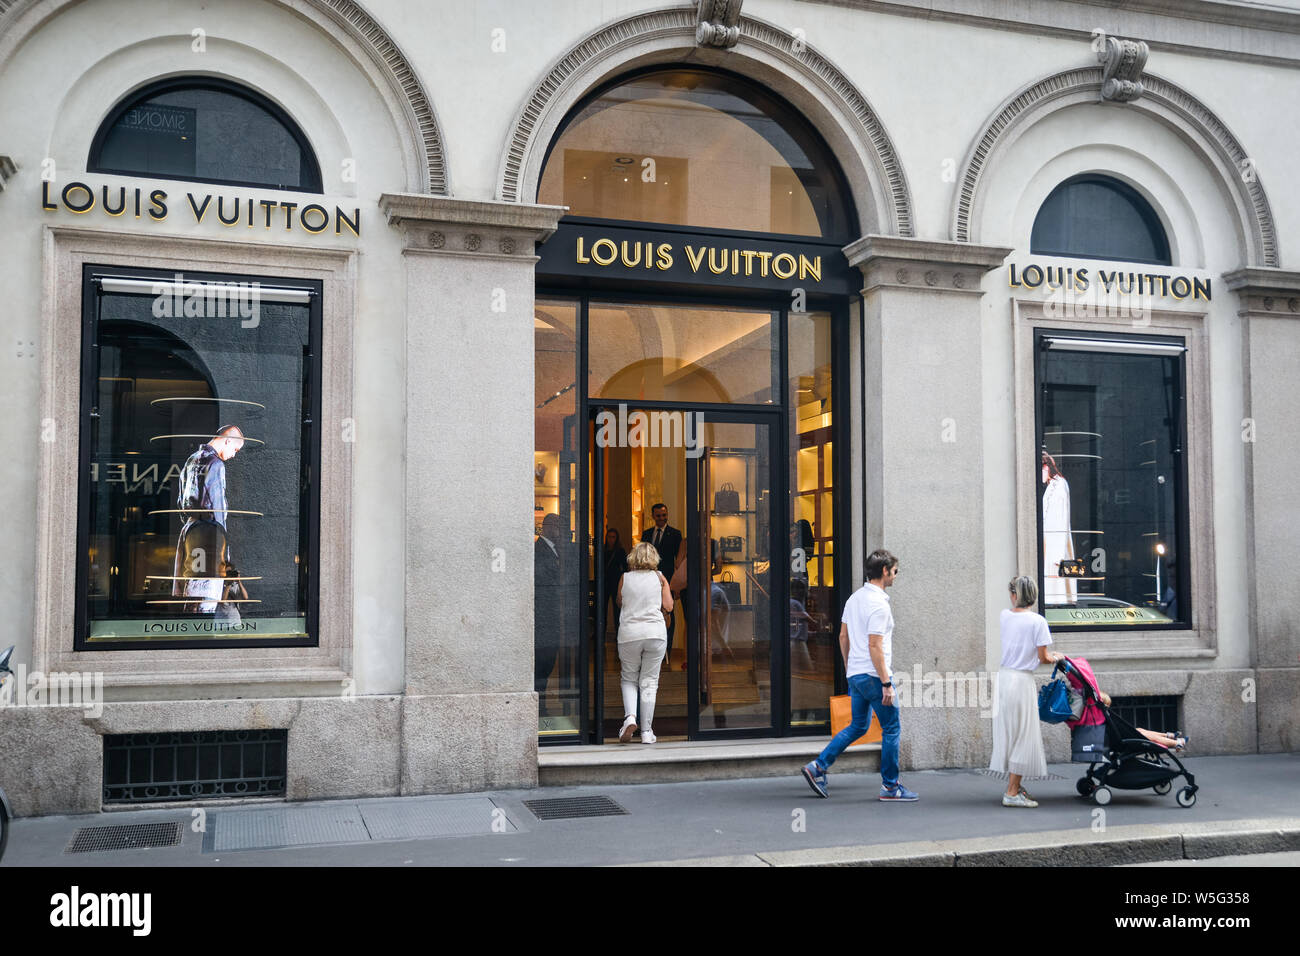 Milan, Italy - September 24, 2017: Louis Vuitton Store In Milan. Fashion  Week Louis Vuitton Shopping Stock Photo, Picture and Royalty Free Image.  Image 93827425.